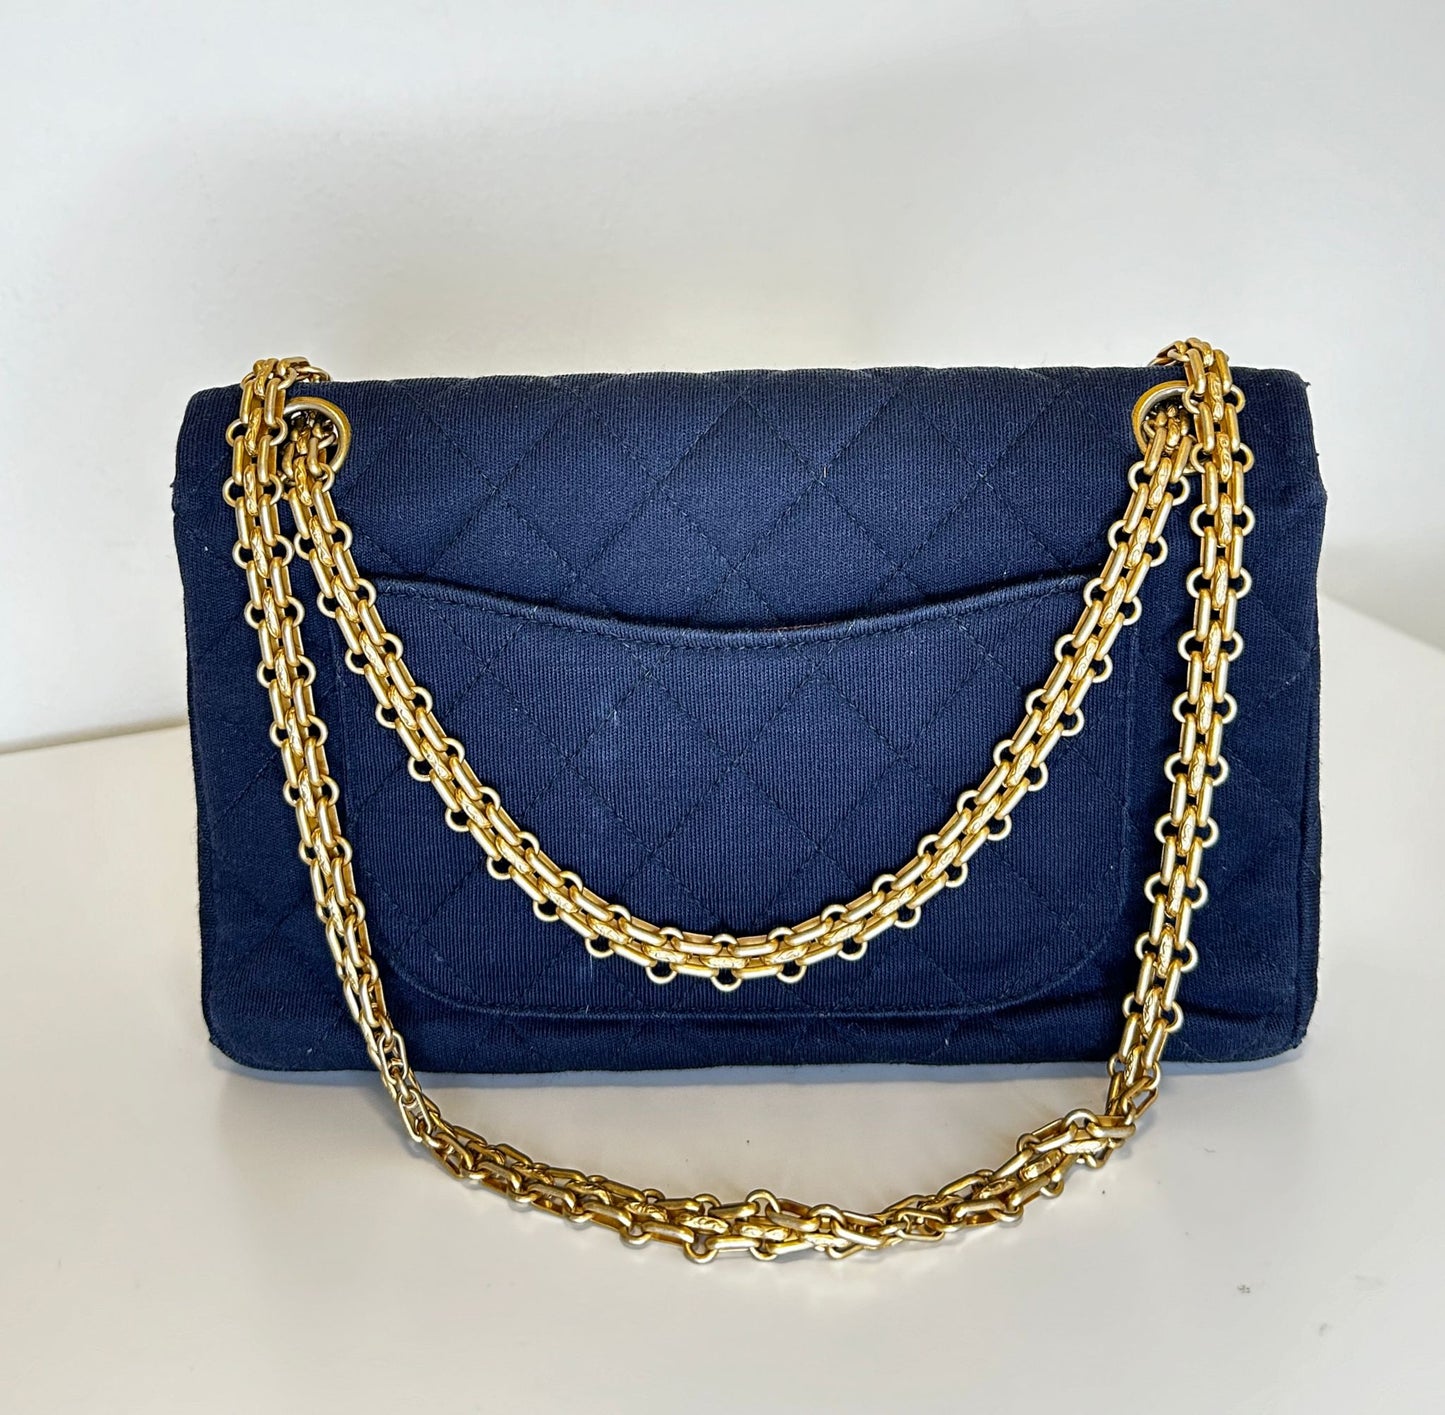 Chanel 2.55 blu